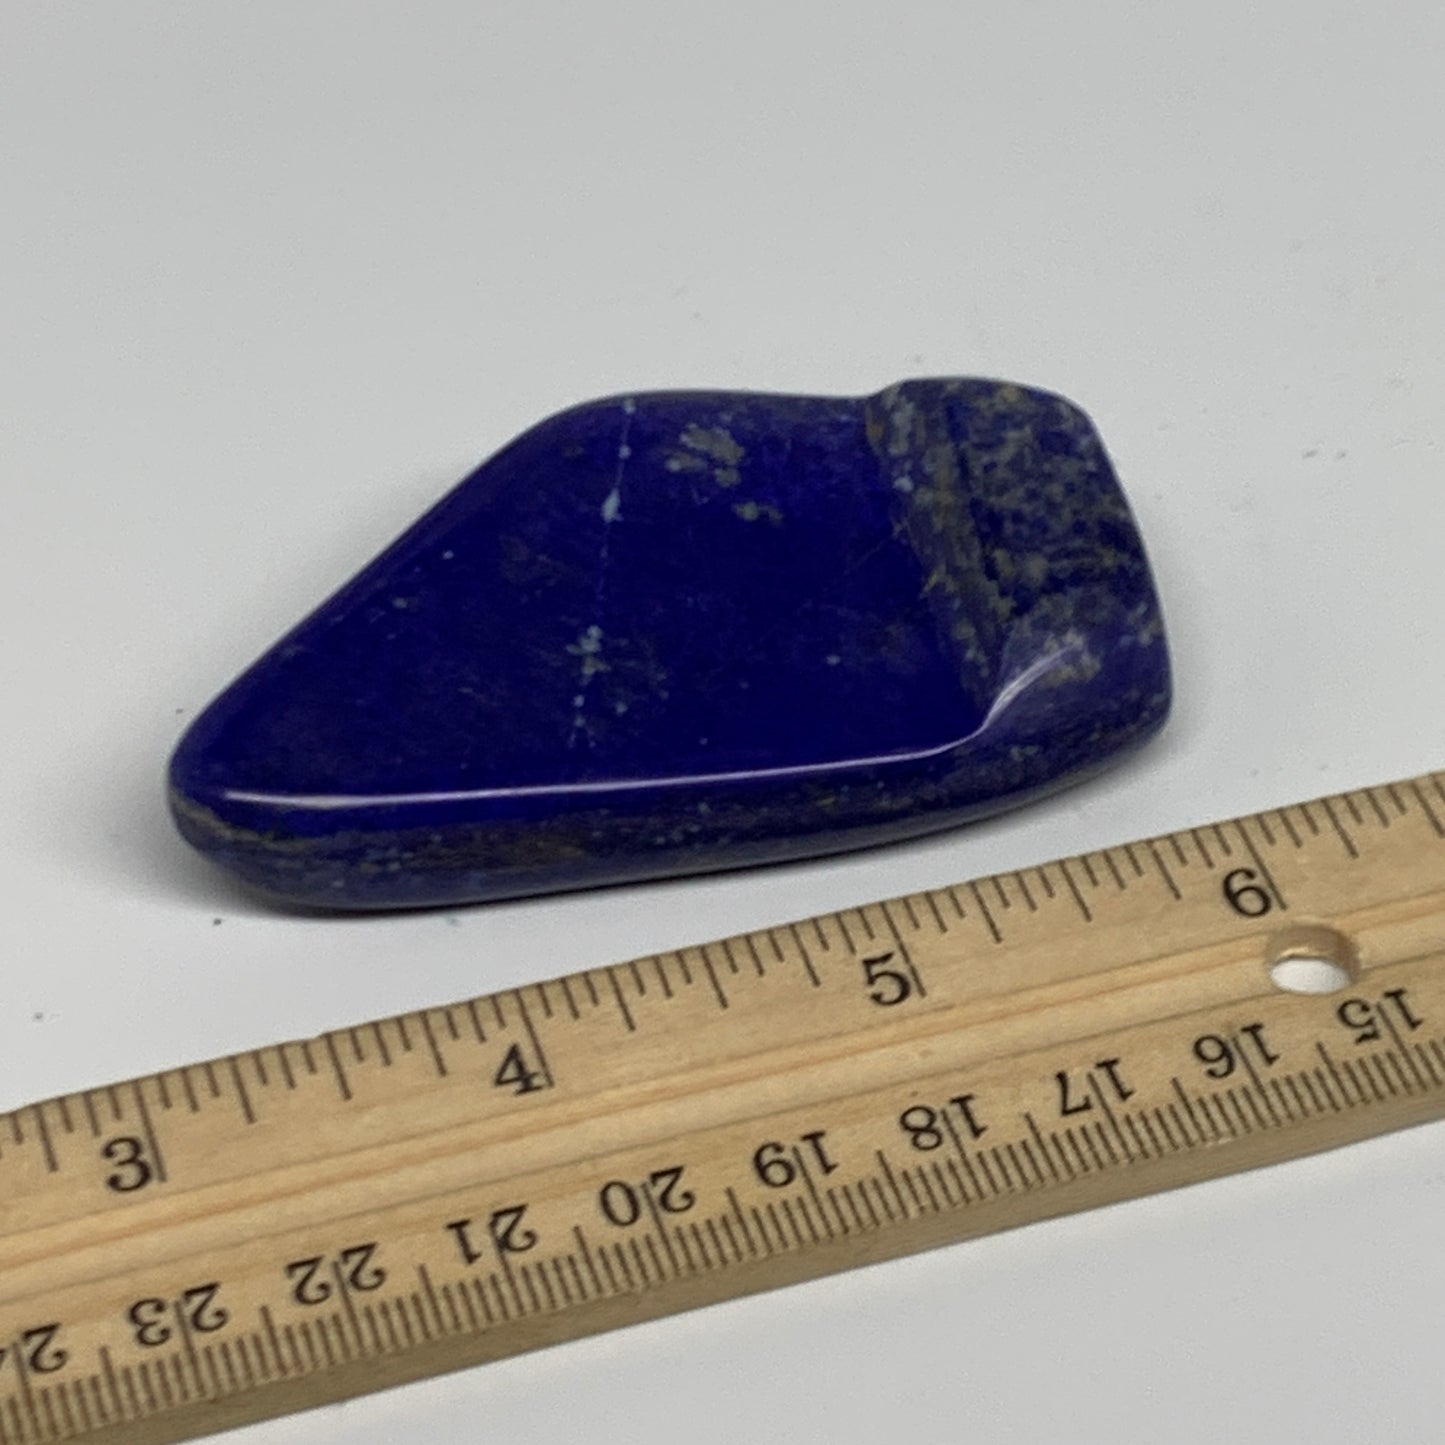 63.4g, 2.7"x1.6"x0.6",  Natural Freeform Lapis Lazuli from Afghanistan, B33107